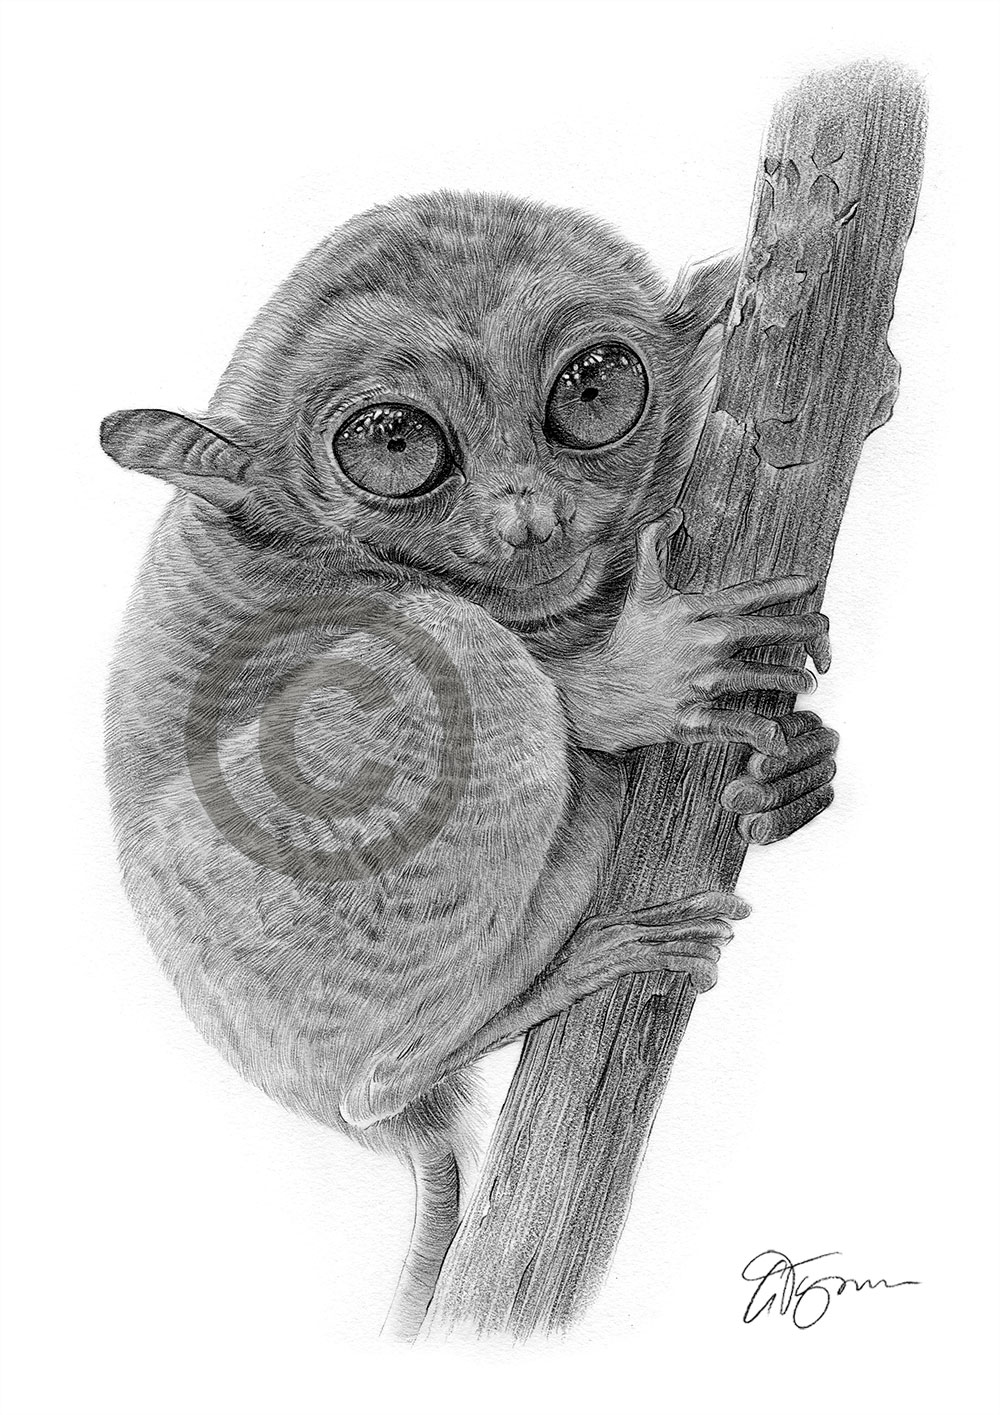 Pencil drawing of a tarsier monkey by artist Gary Tymon